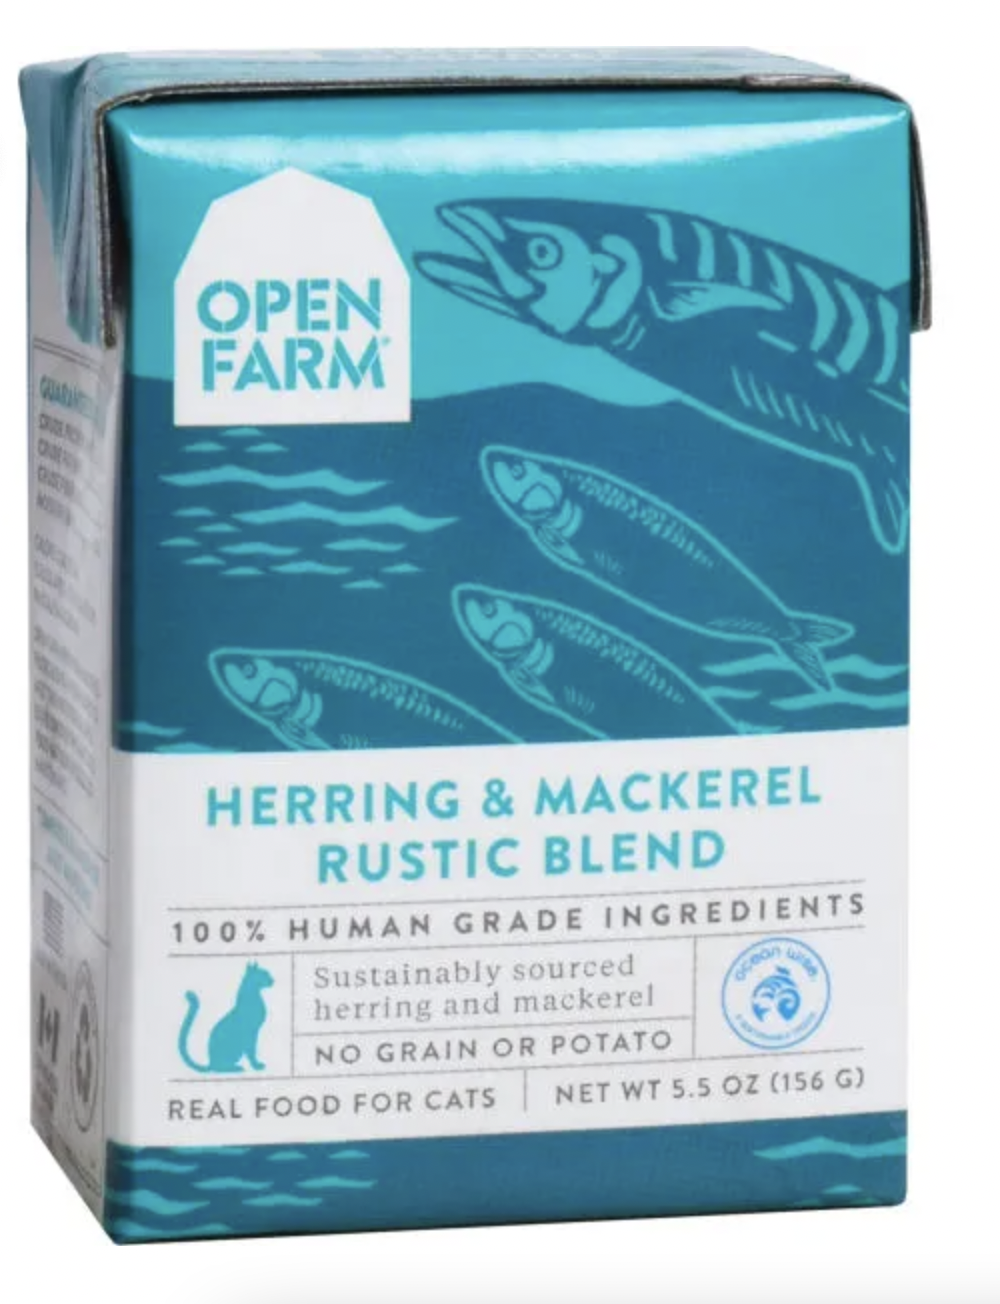 Herring & Mackerel Rustic Blend Cat Food - Open Farm